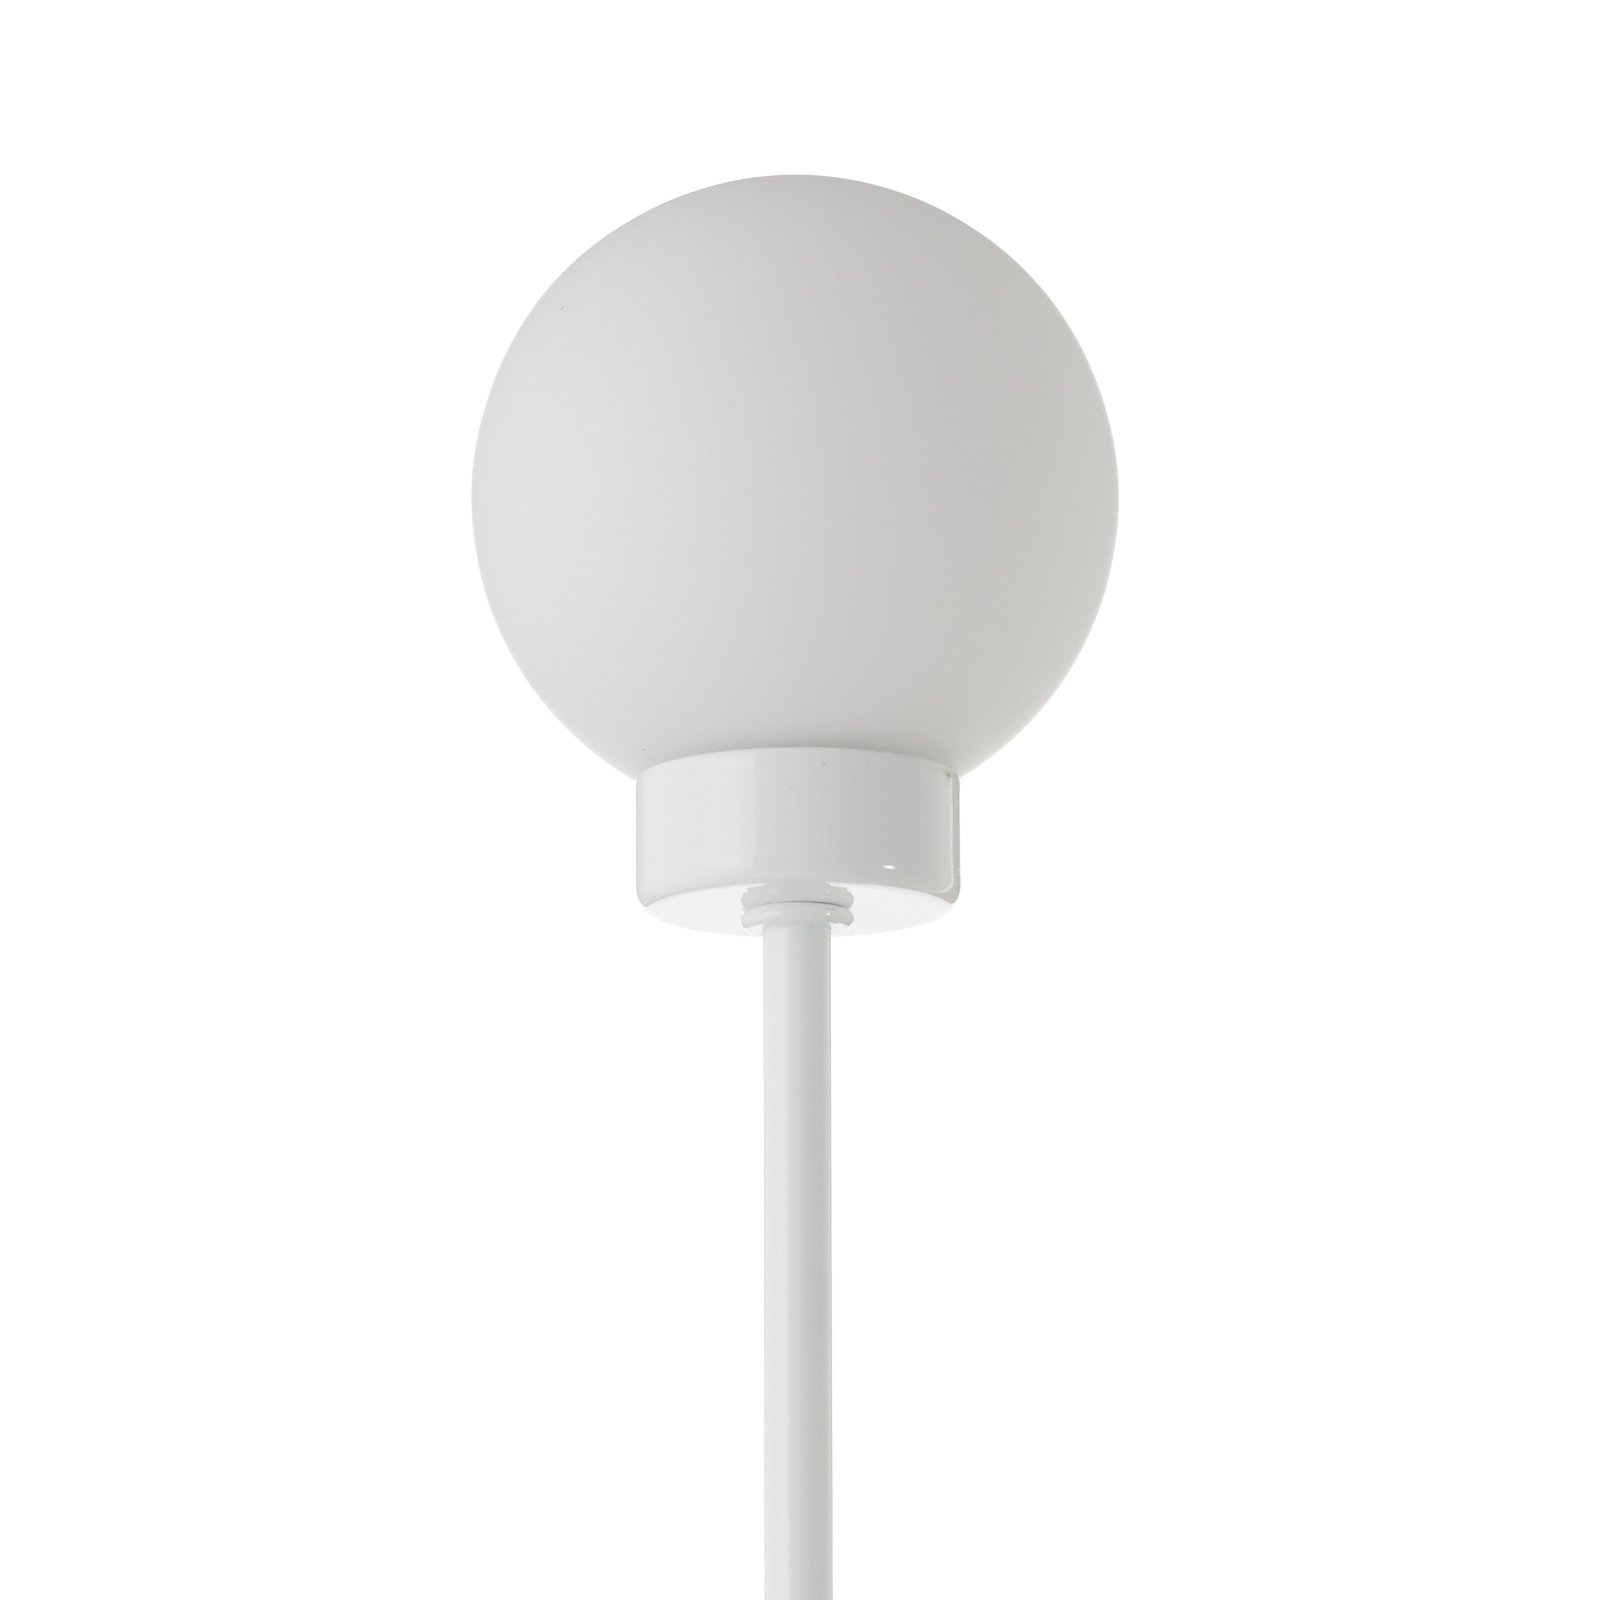 Northern Snowball lampadaire, blanc